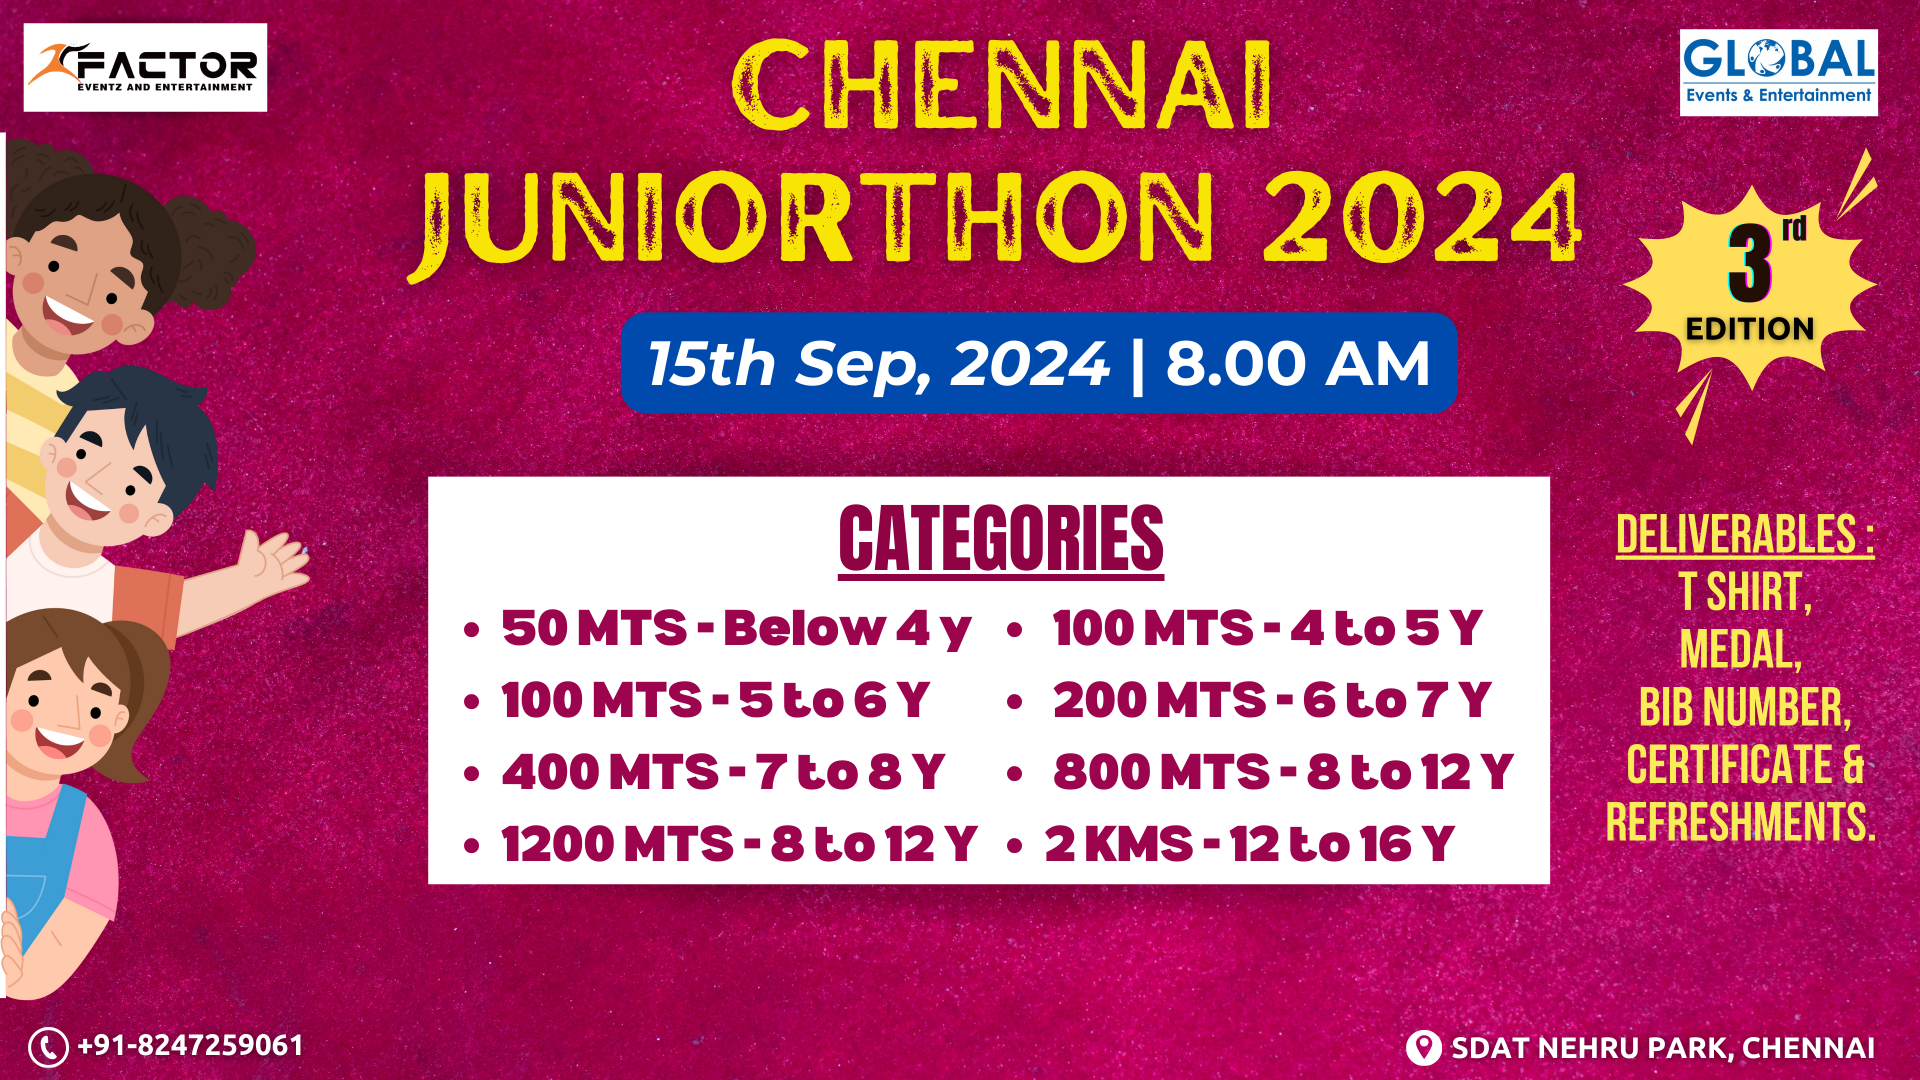 Chennai Juniorthon 2024